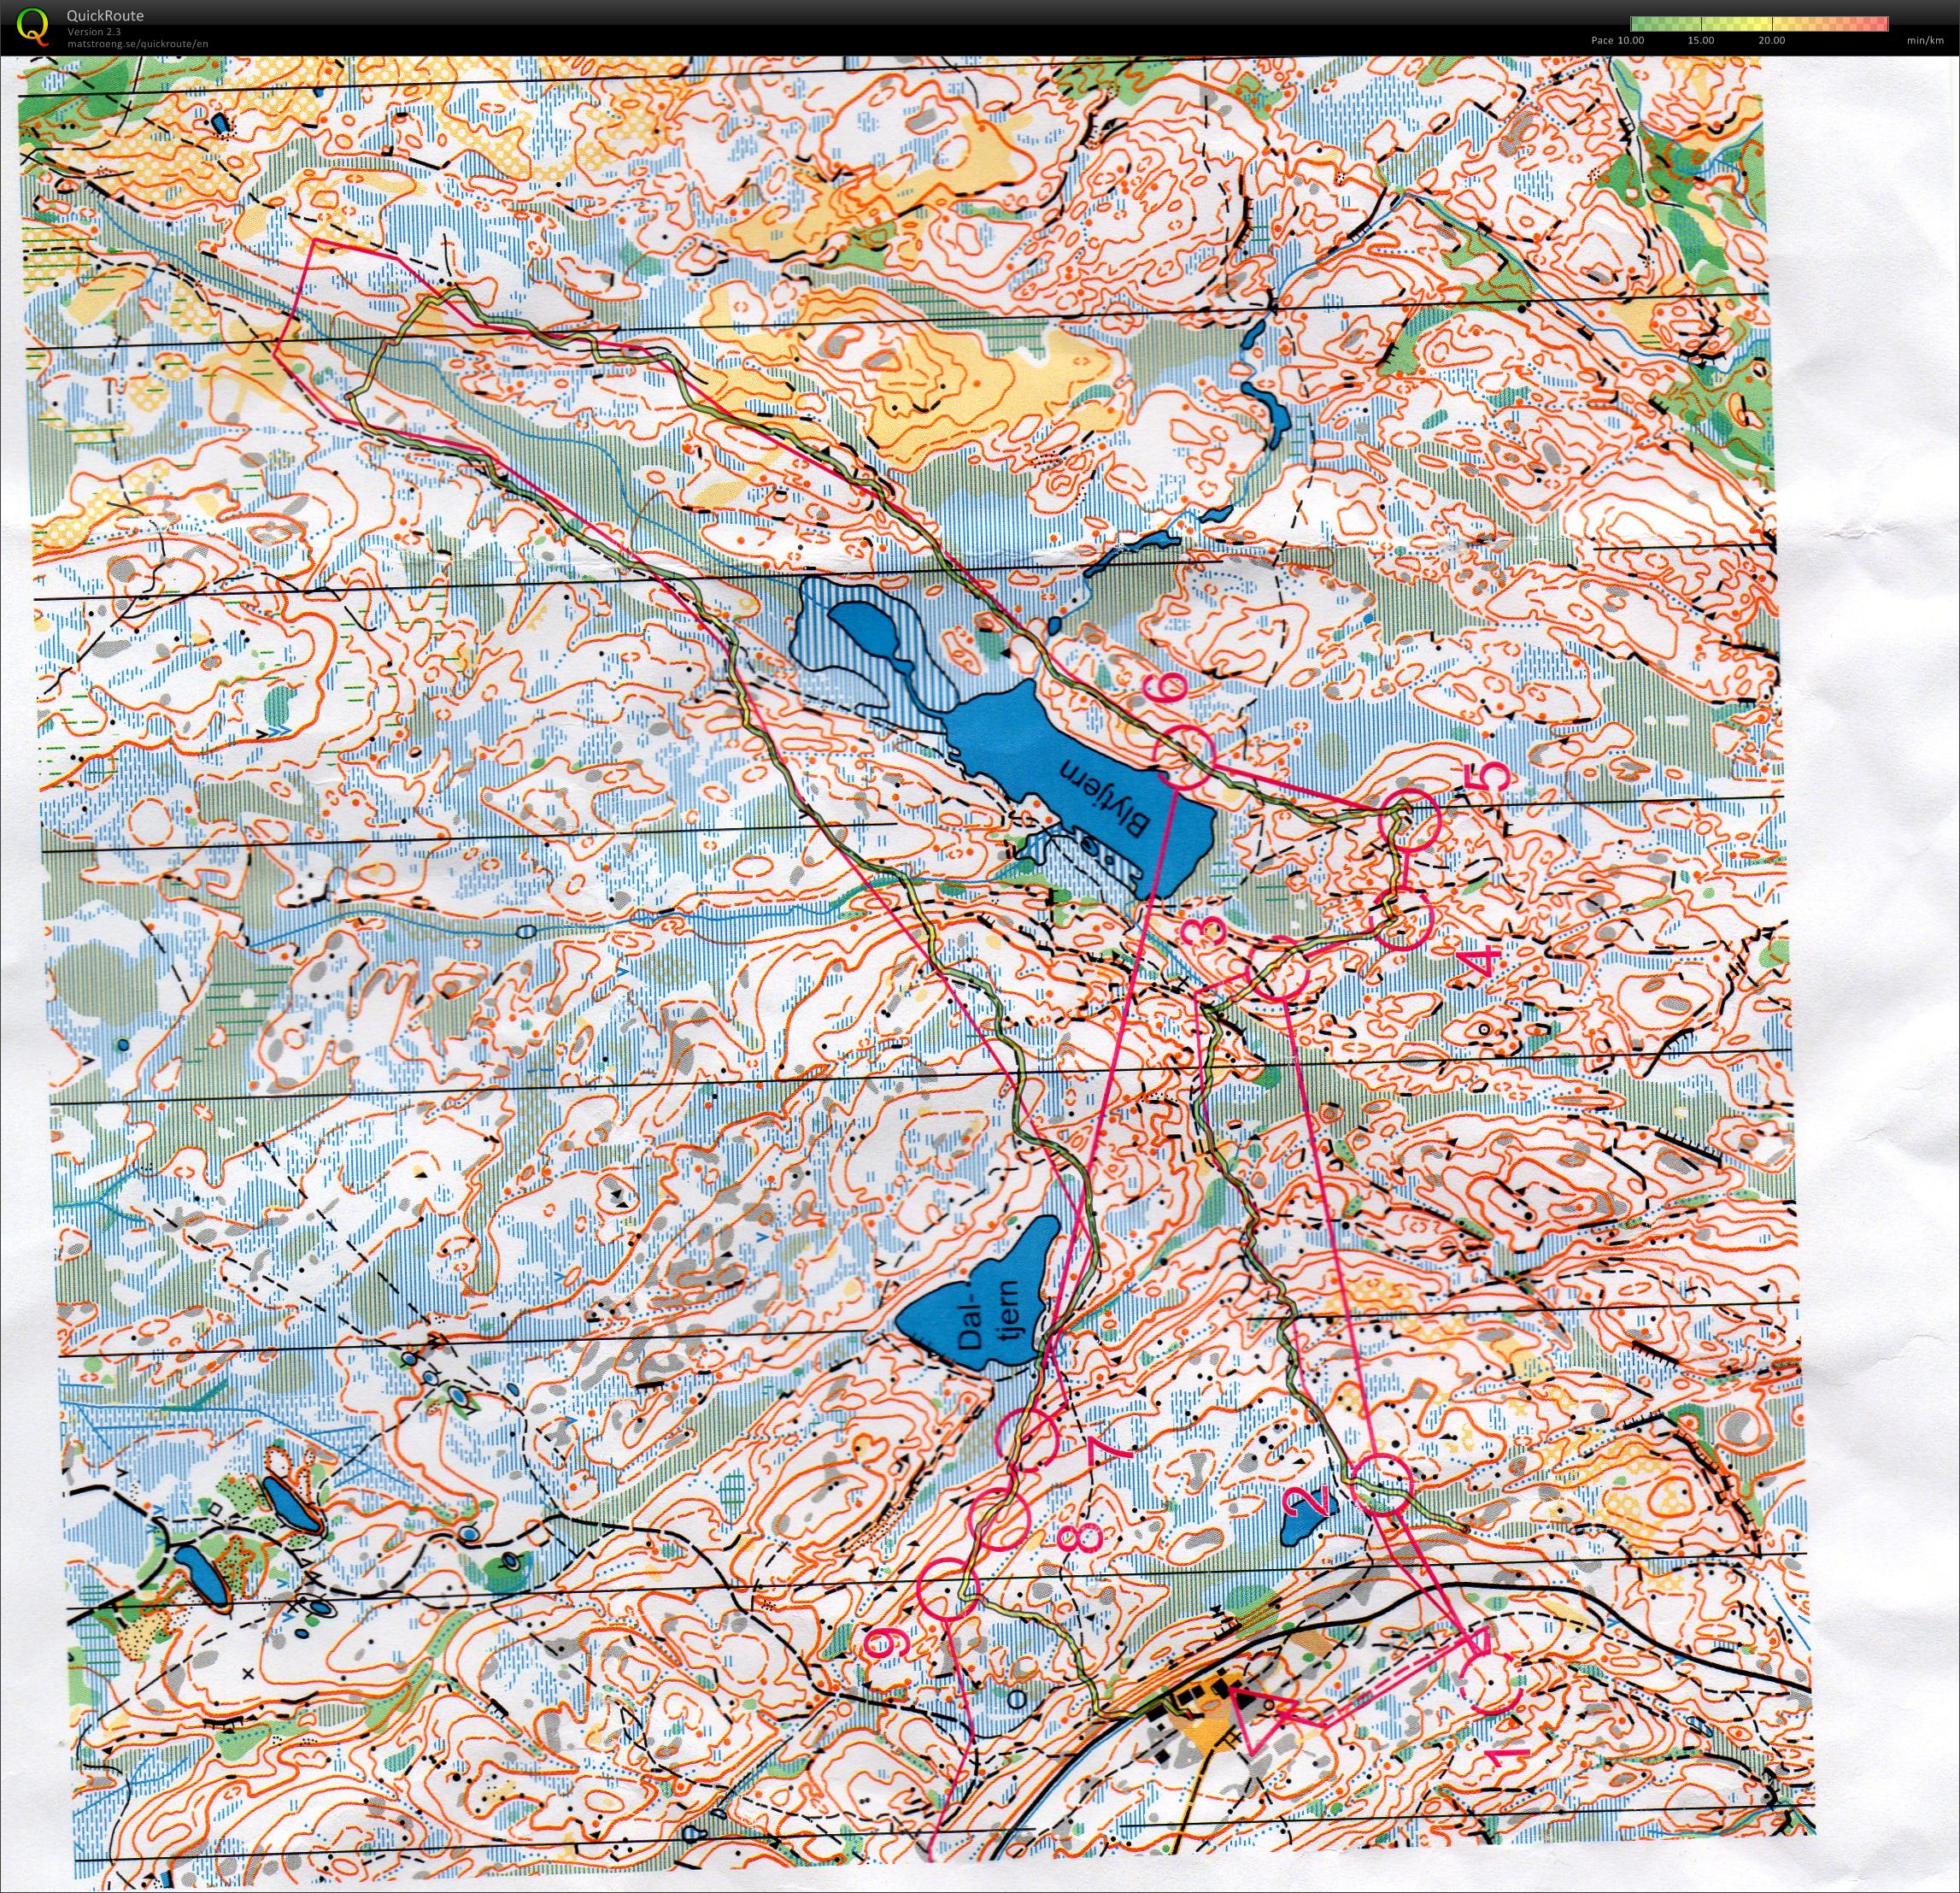 Løpetur på kart i høiåsmarka (04.11.2011)